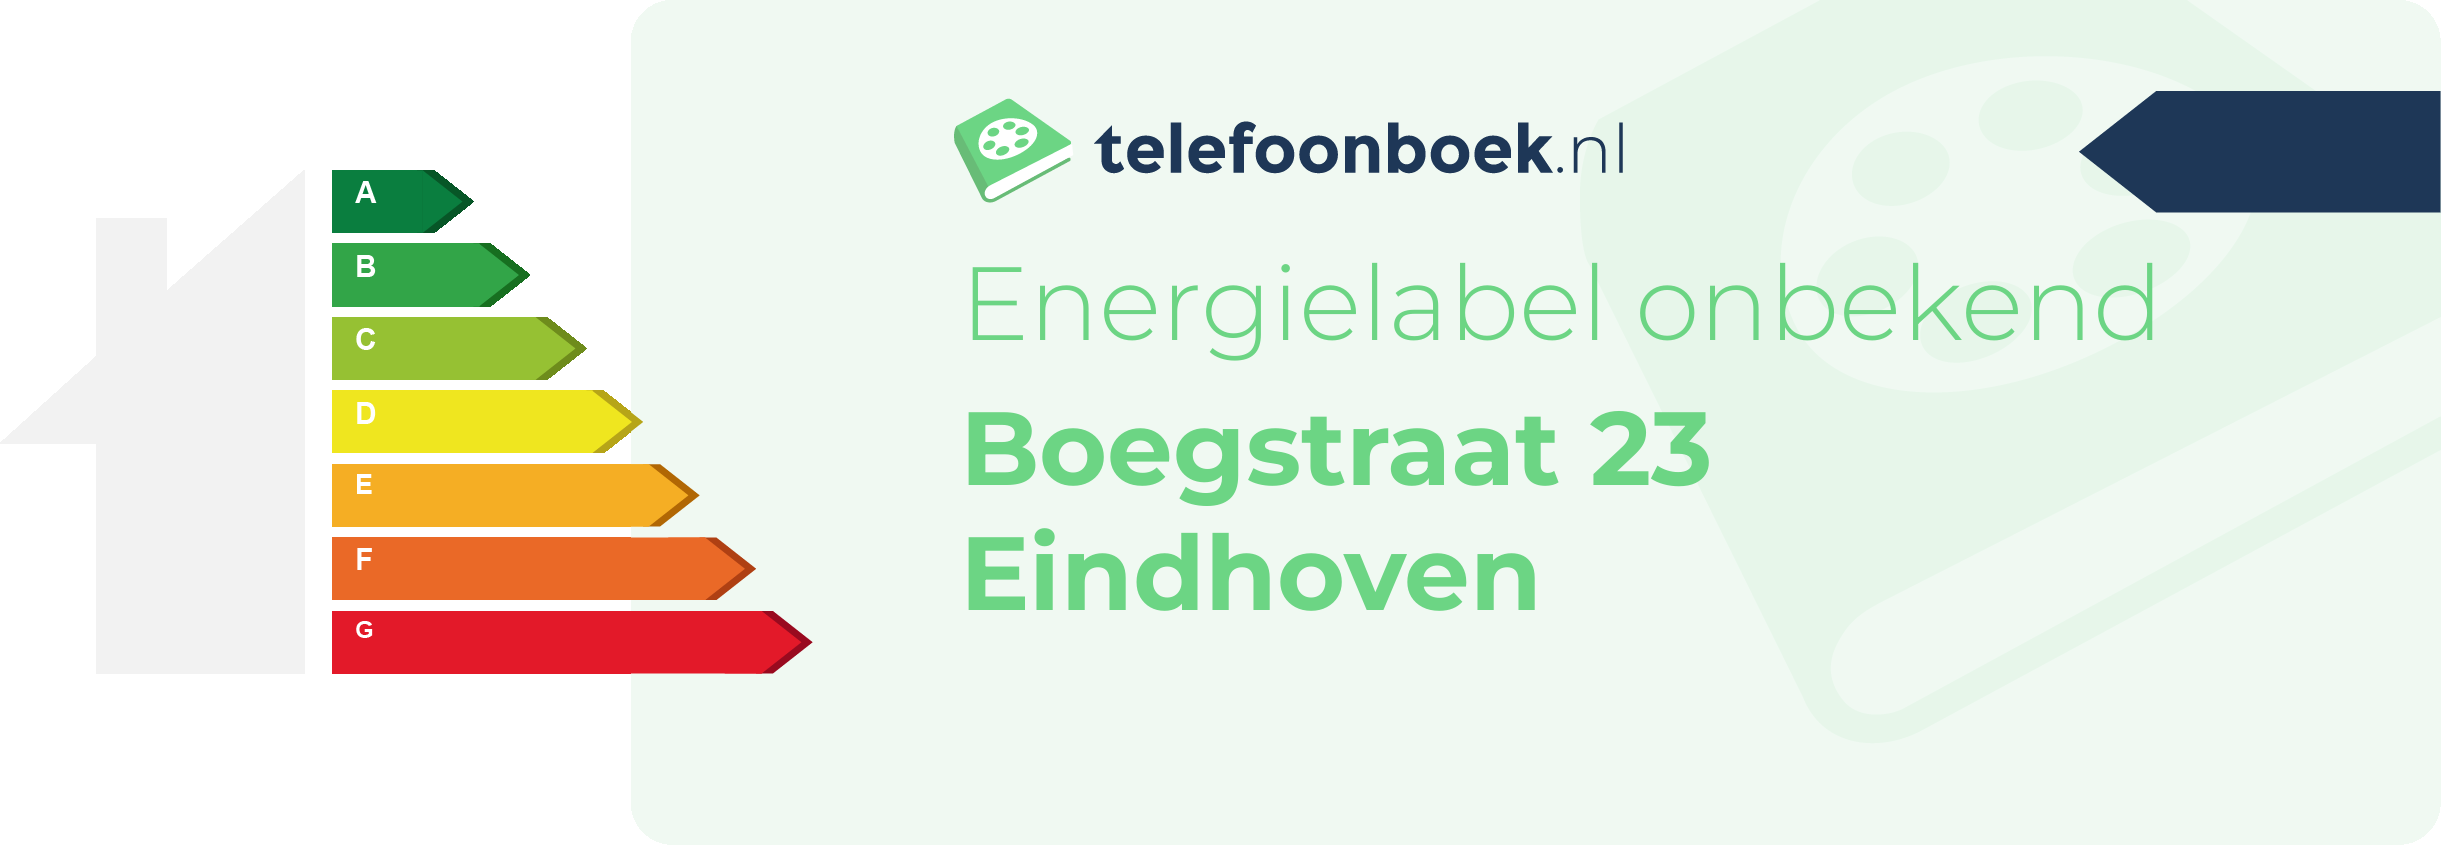 Energielabel Boegstraat 23 Eindhoven